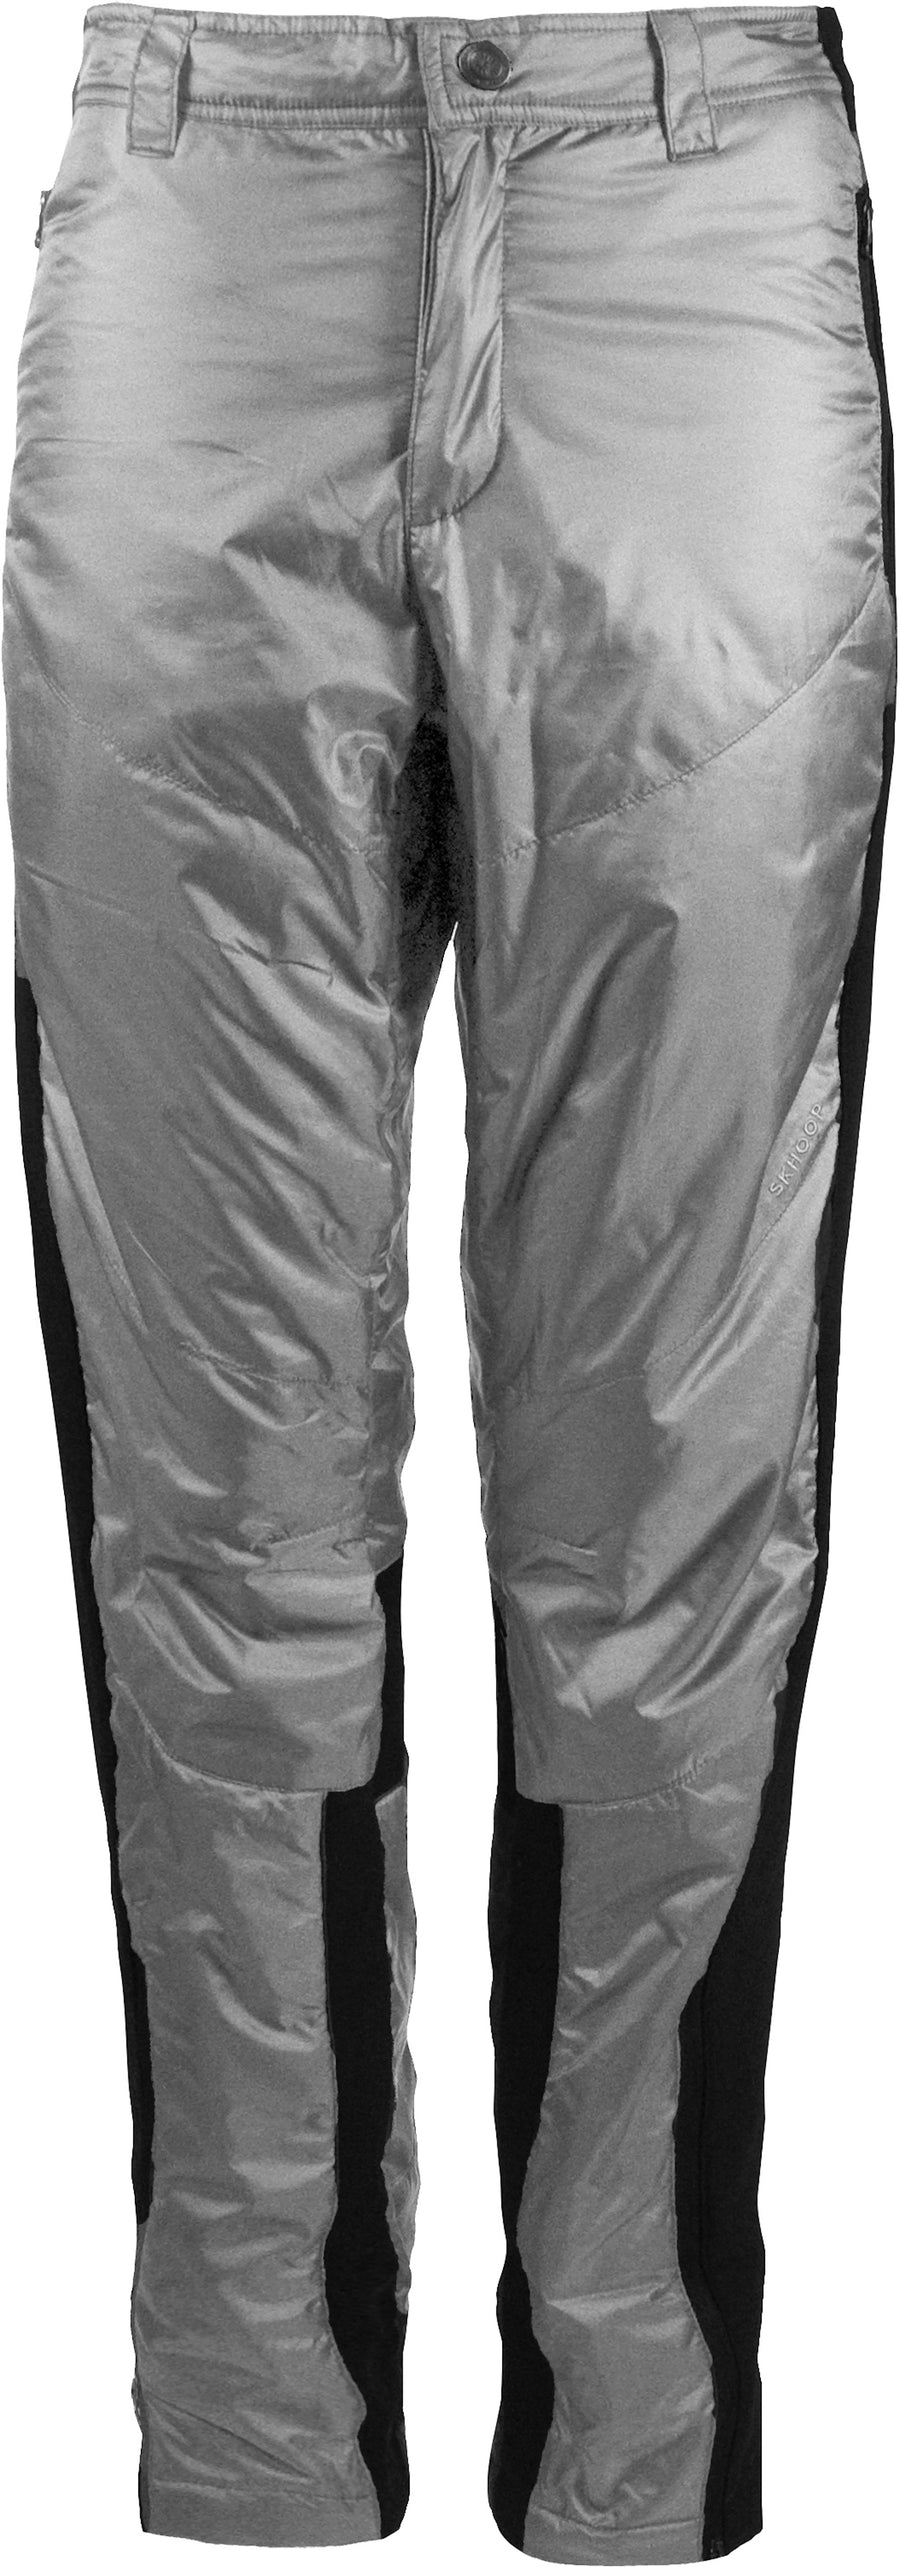 skhoop insulated aluu pants in graphite